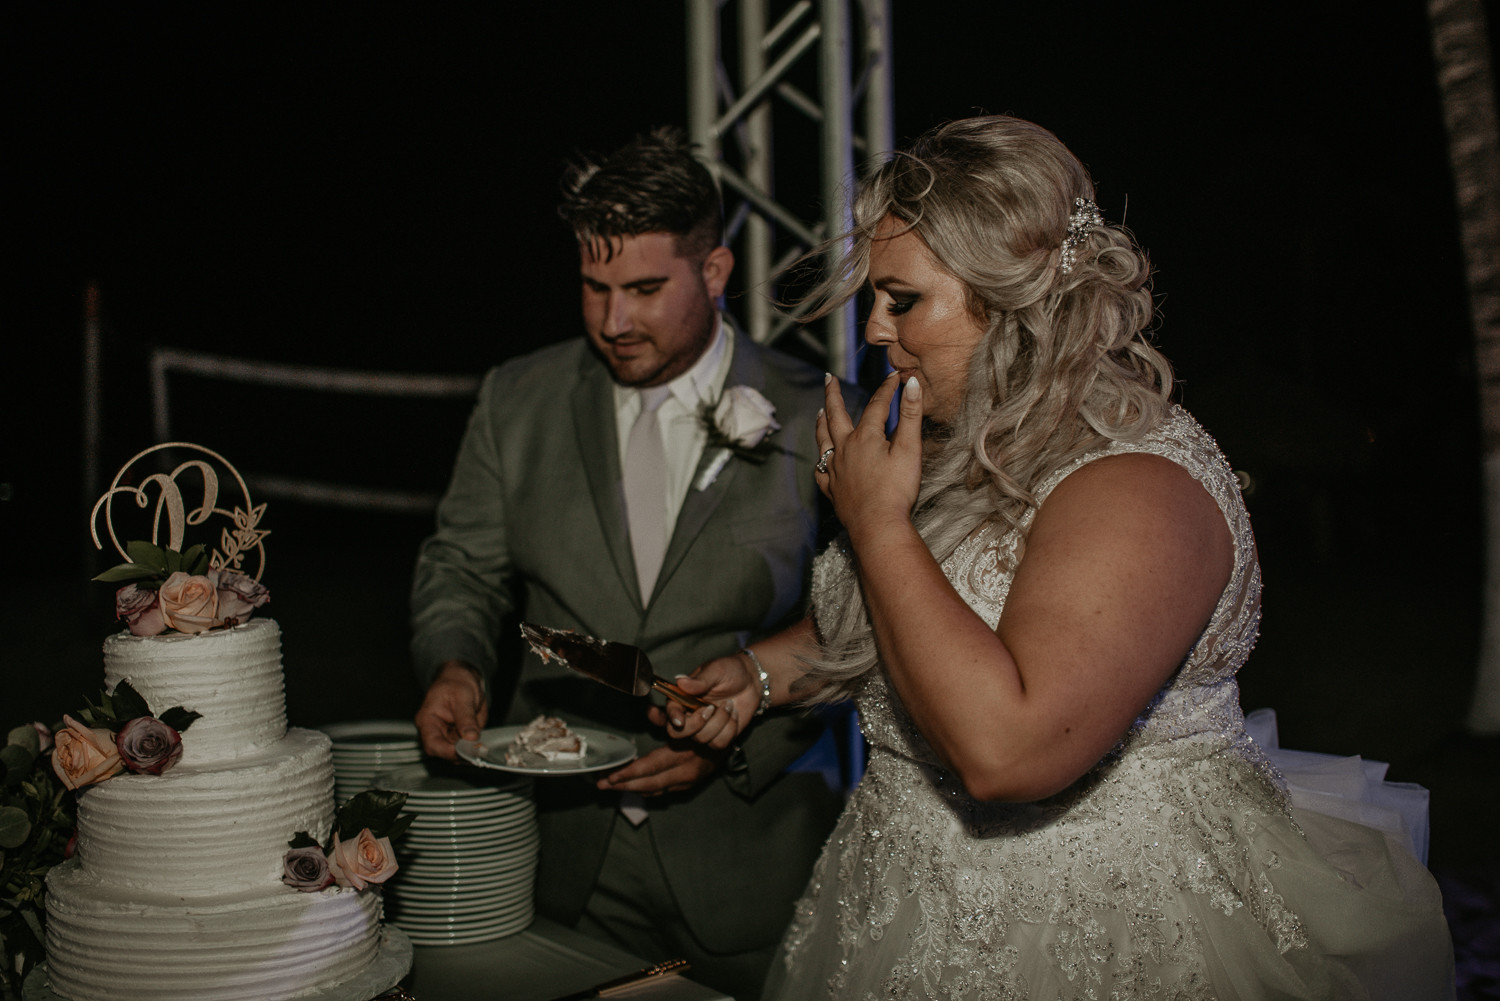 Bride and groom cutting wedding cake